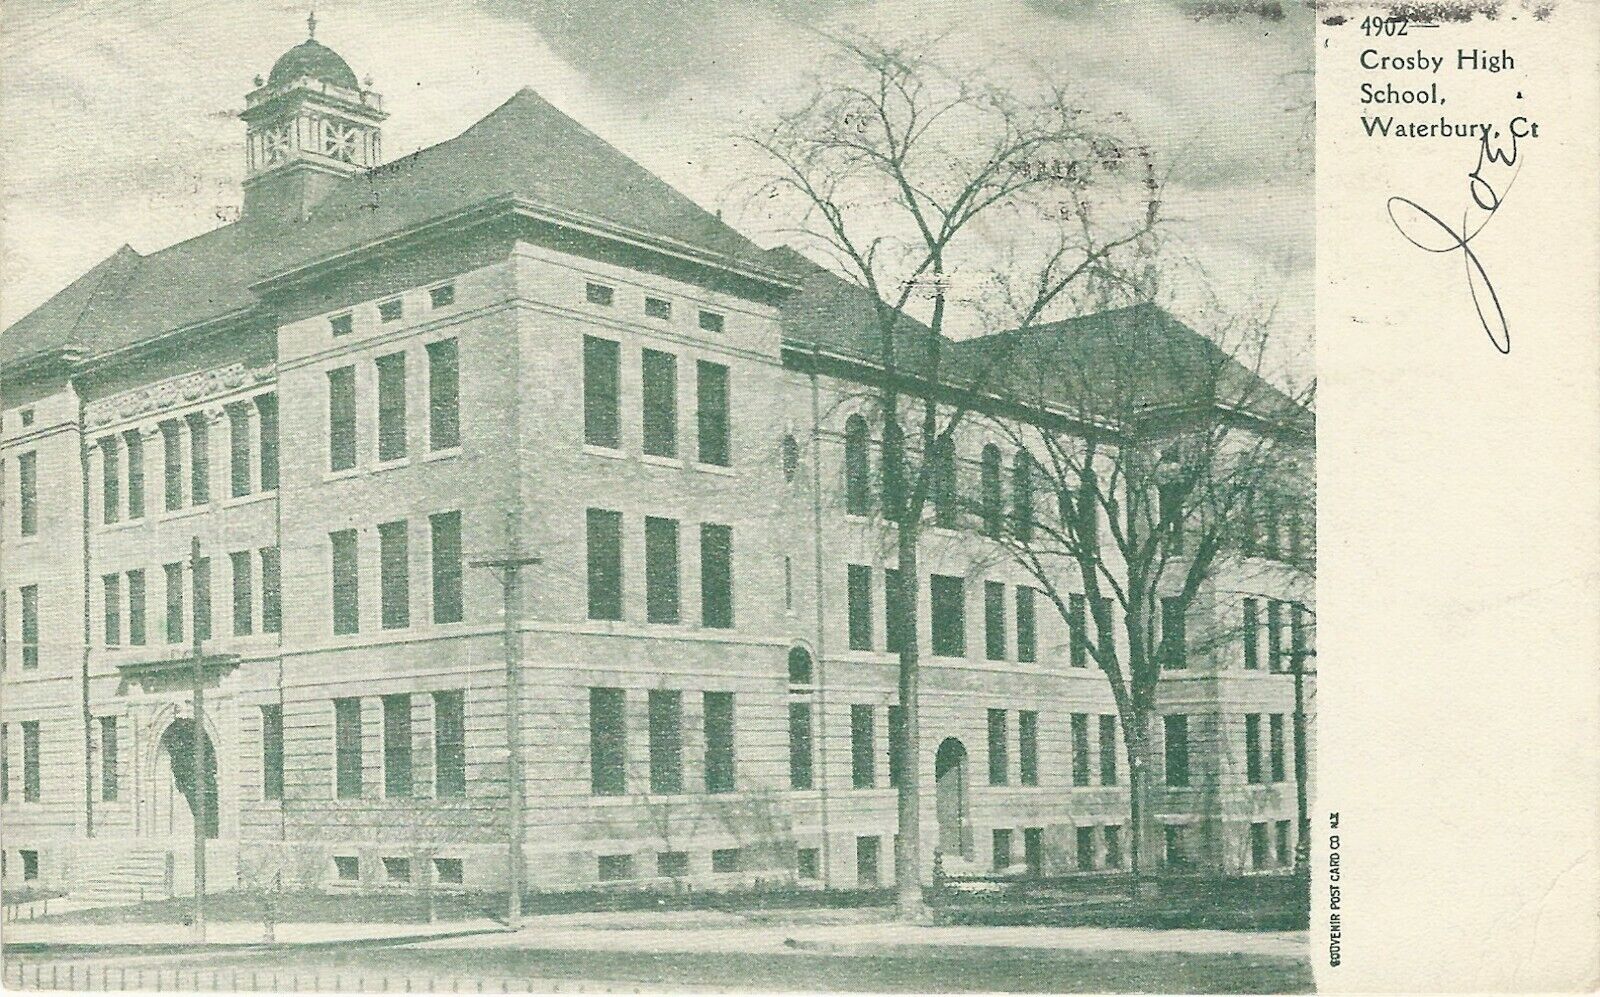 Crosby High School, Waterbury, Connecticut, Early Postcard, Used in 1907